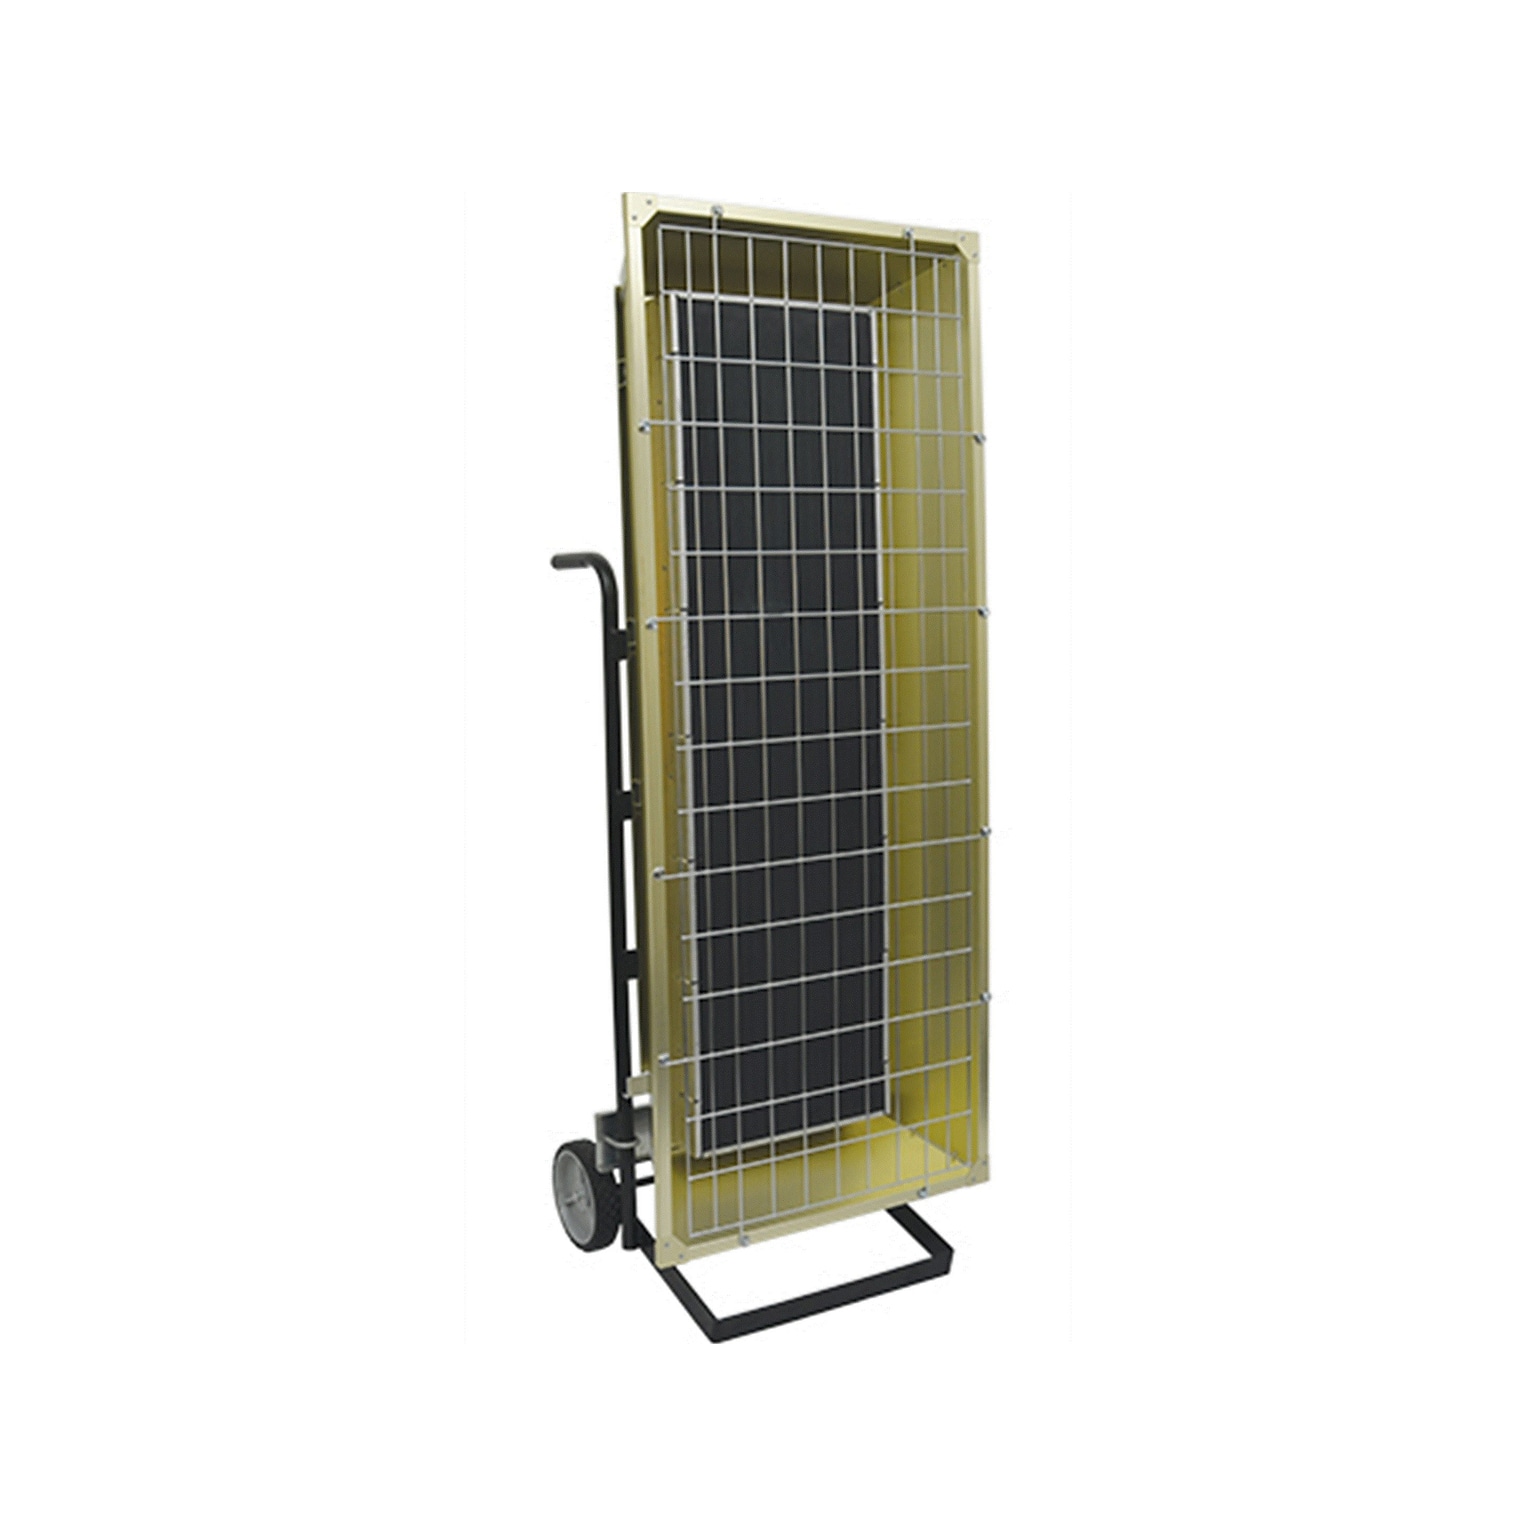 TPI Corporation Fostoria FSP 9500-Watt 32414 BTU Portable Indoor/Outdoor Infrared Electric Heater, Gold (04885002)